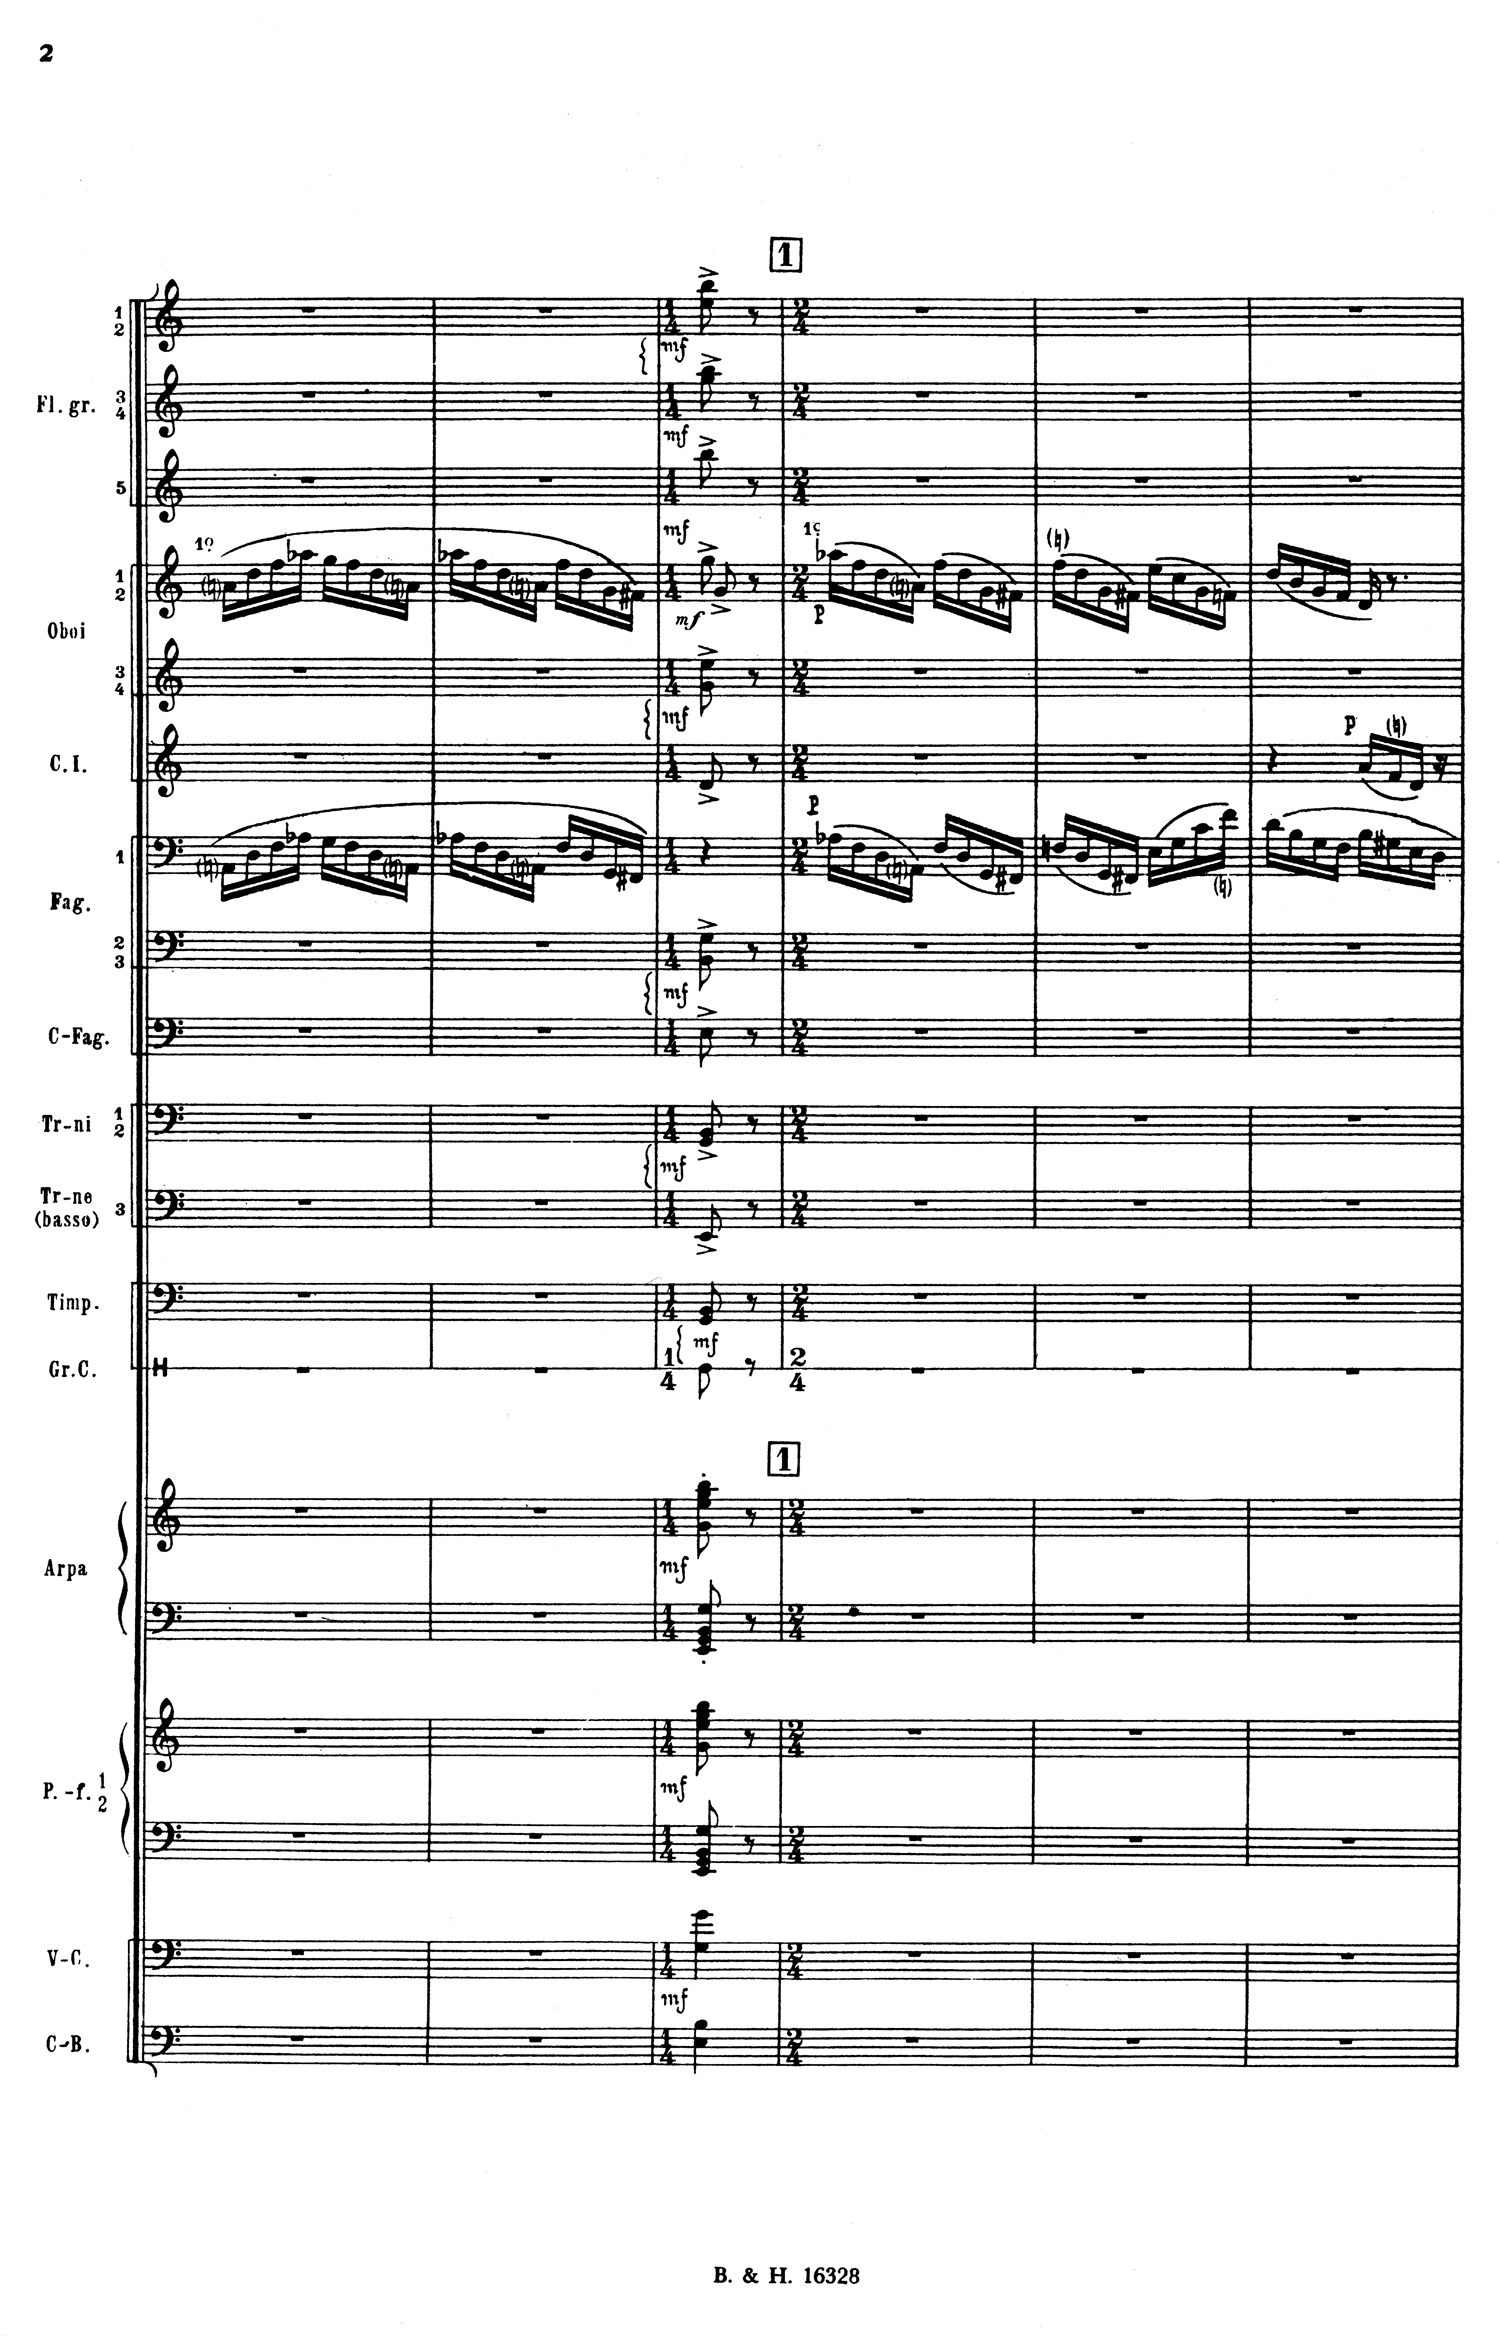 Stravinsky Psalms Score 2.jpg